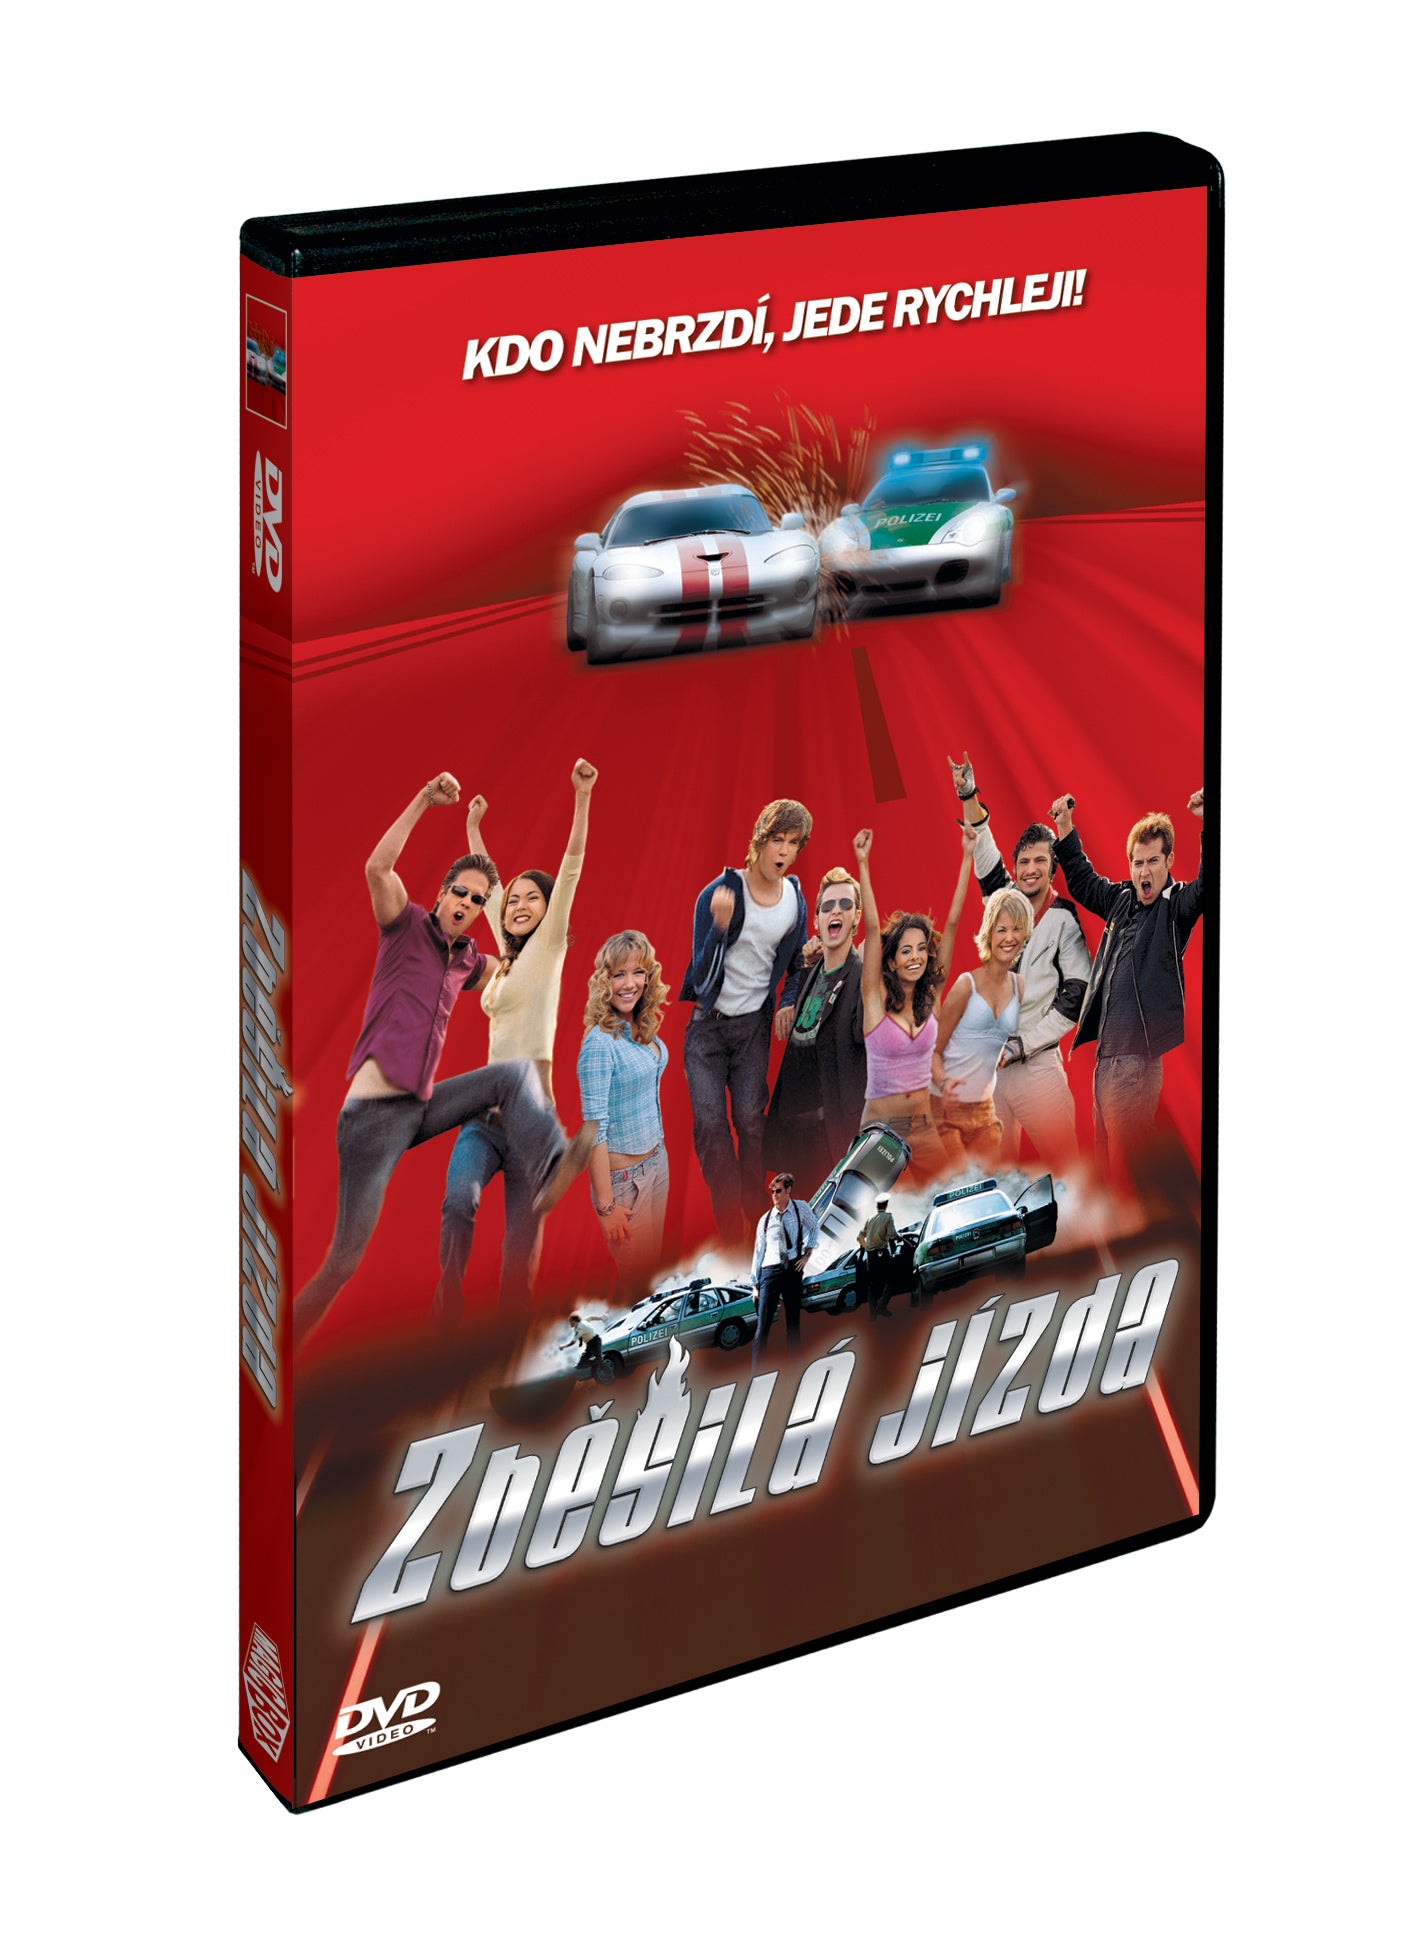 Zbesila jizda DVD / Autobahnraser